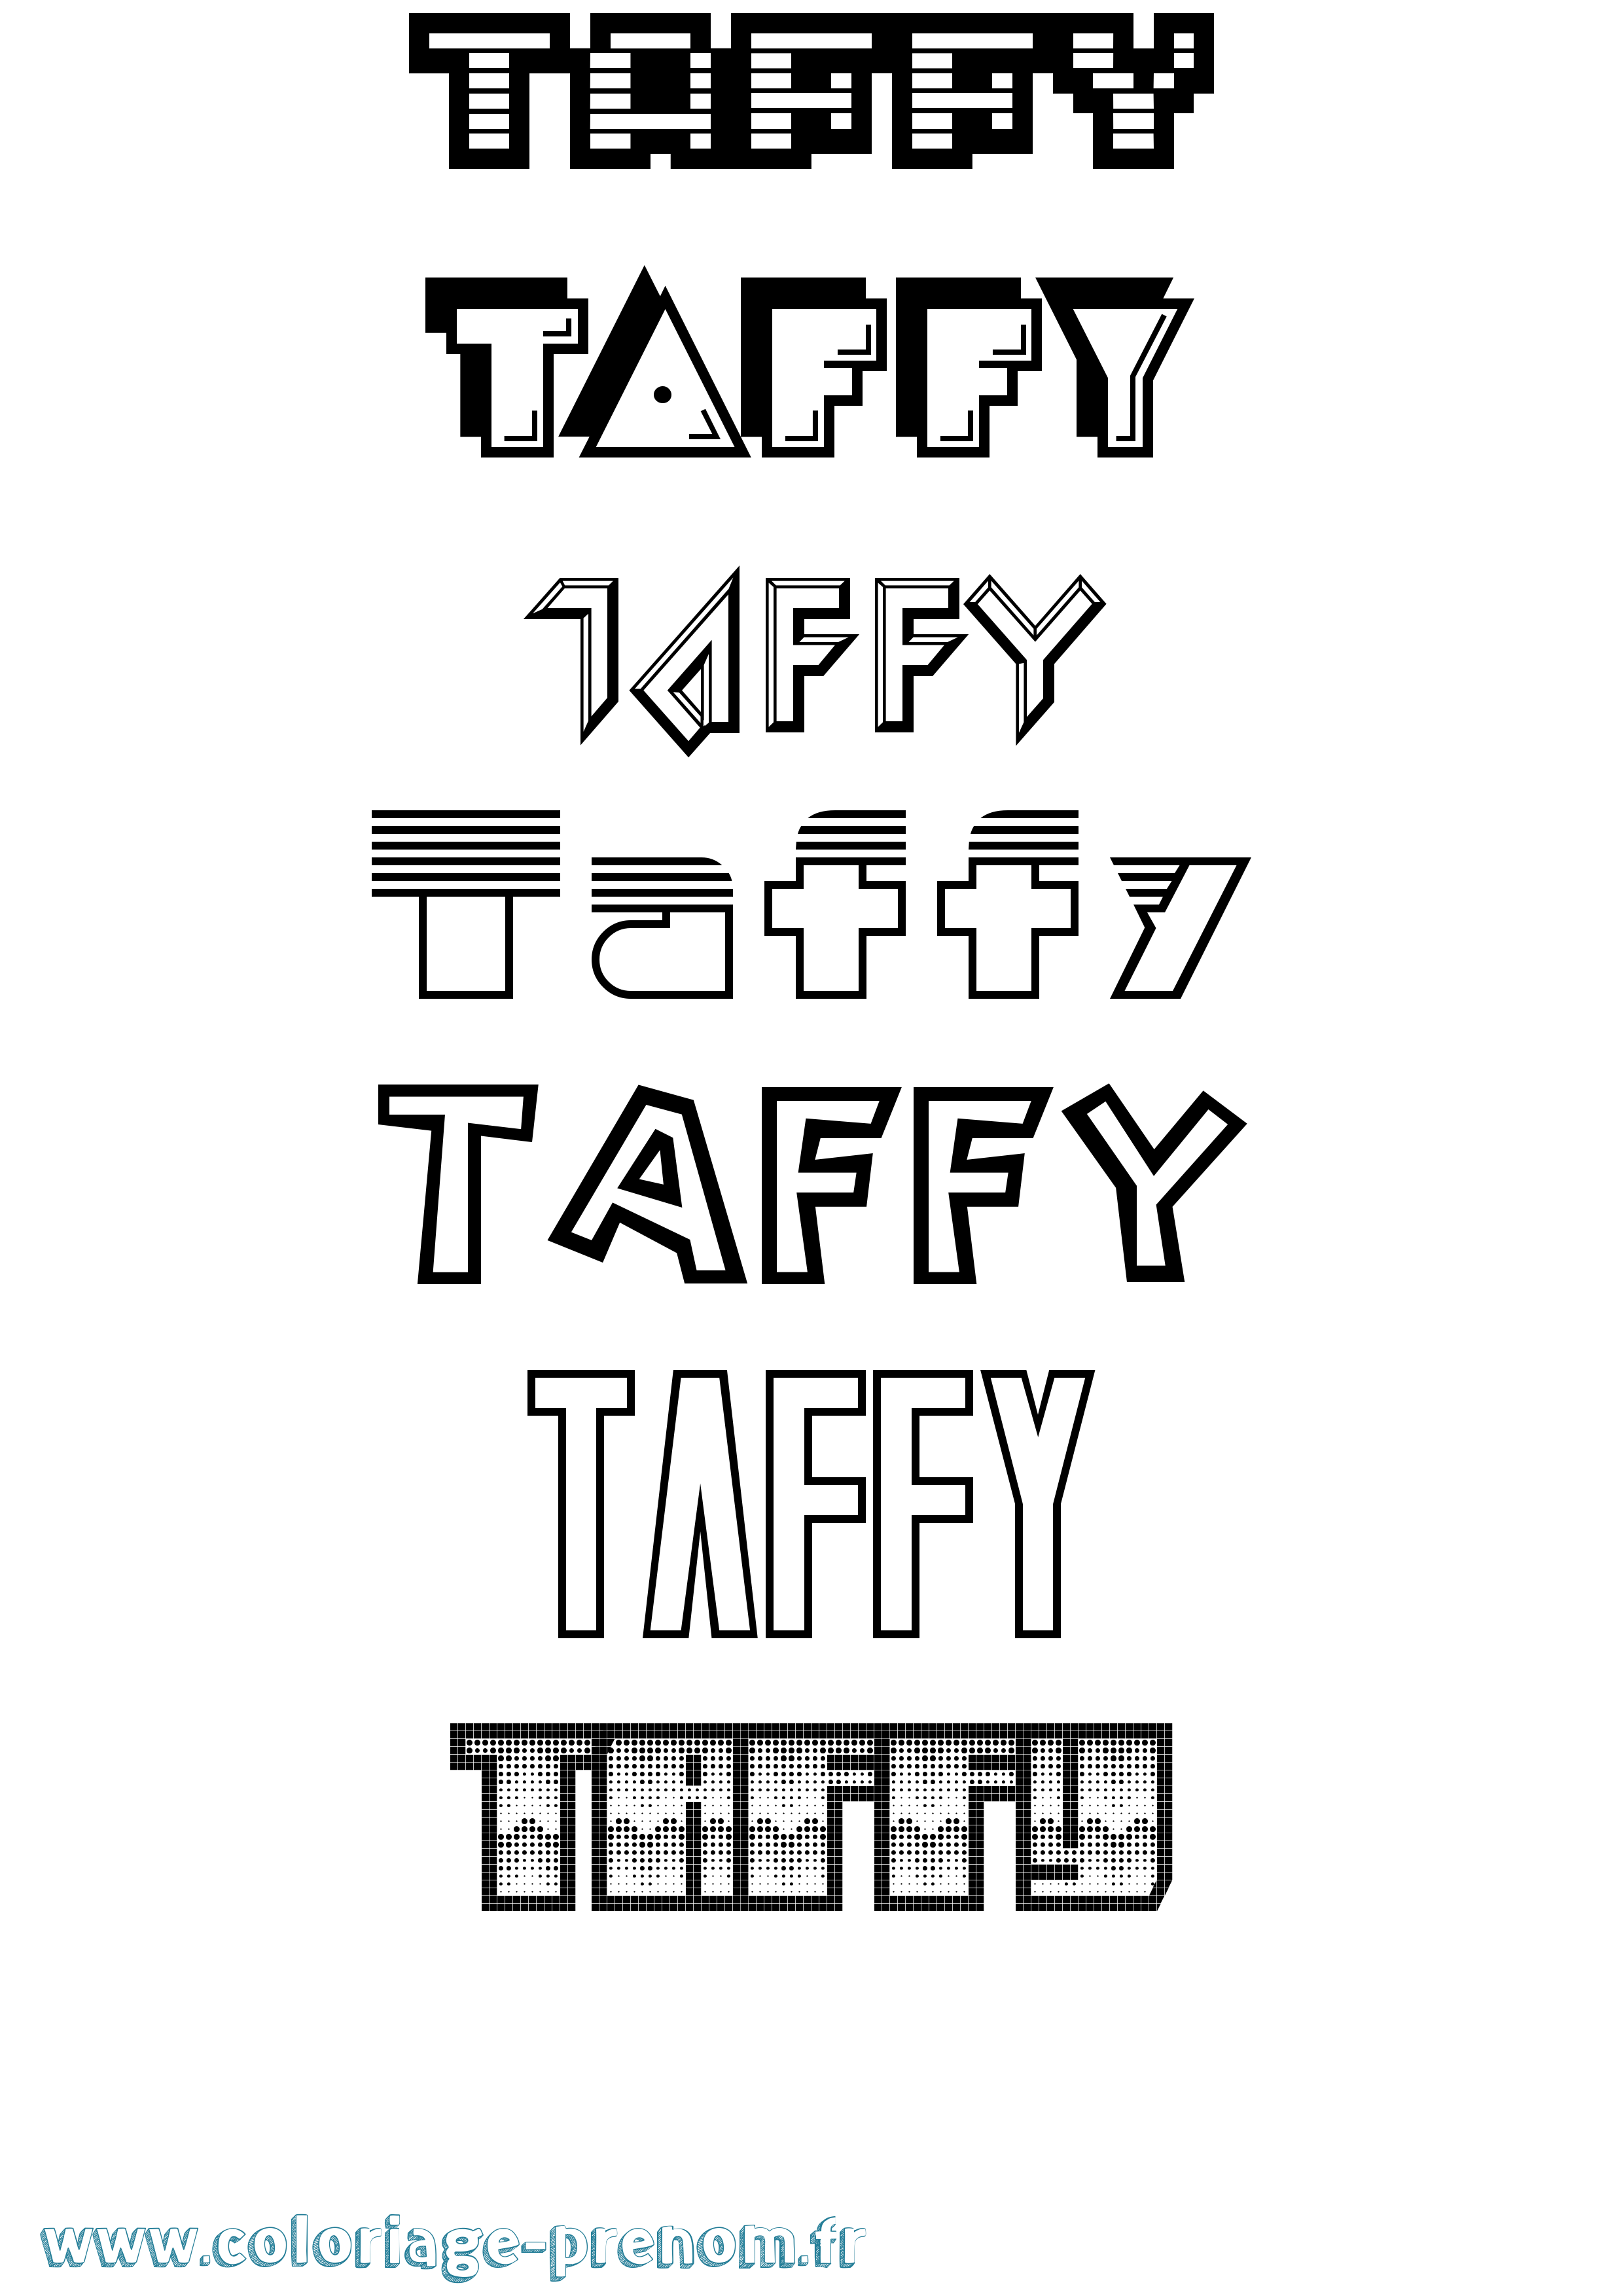 Coloriage prénom Taffy Jeux Vidéos